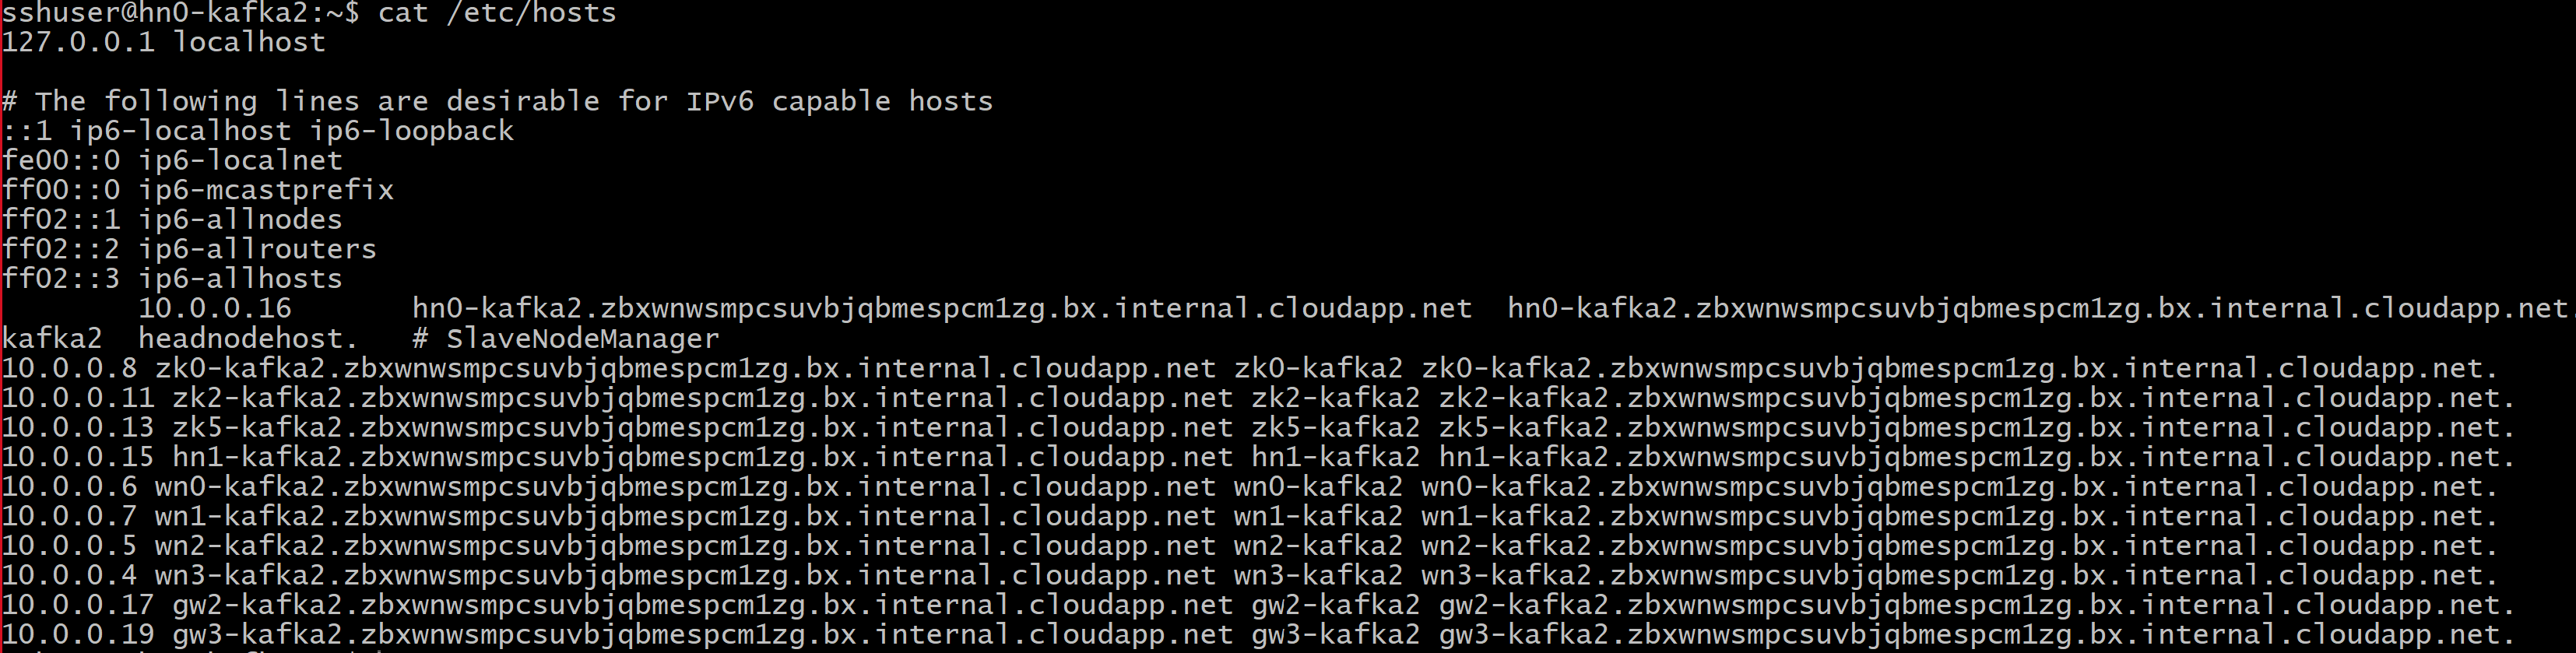 Captura de pantalla que muestra la salida del archivo hosts.